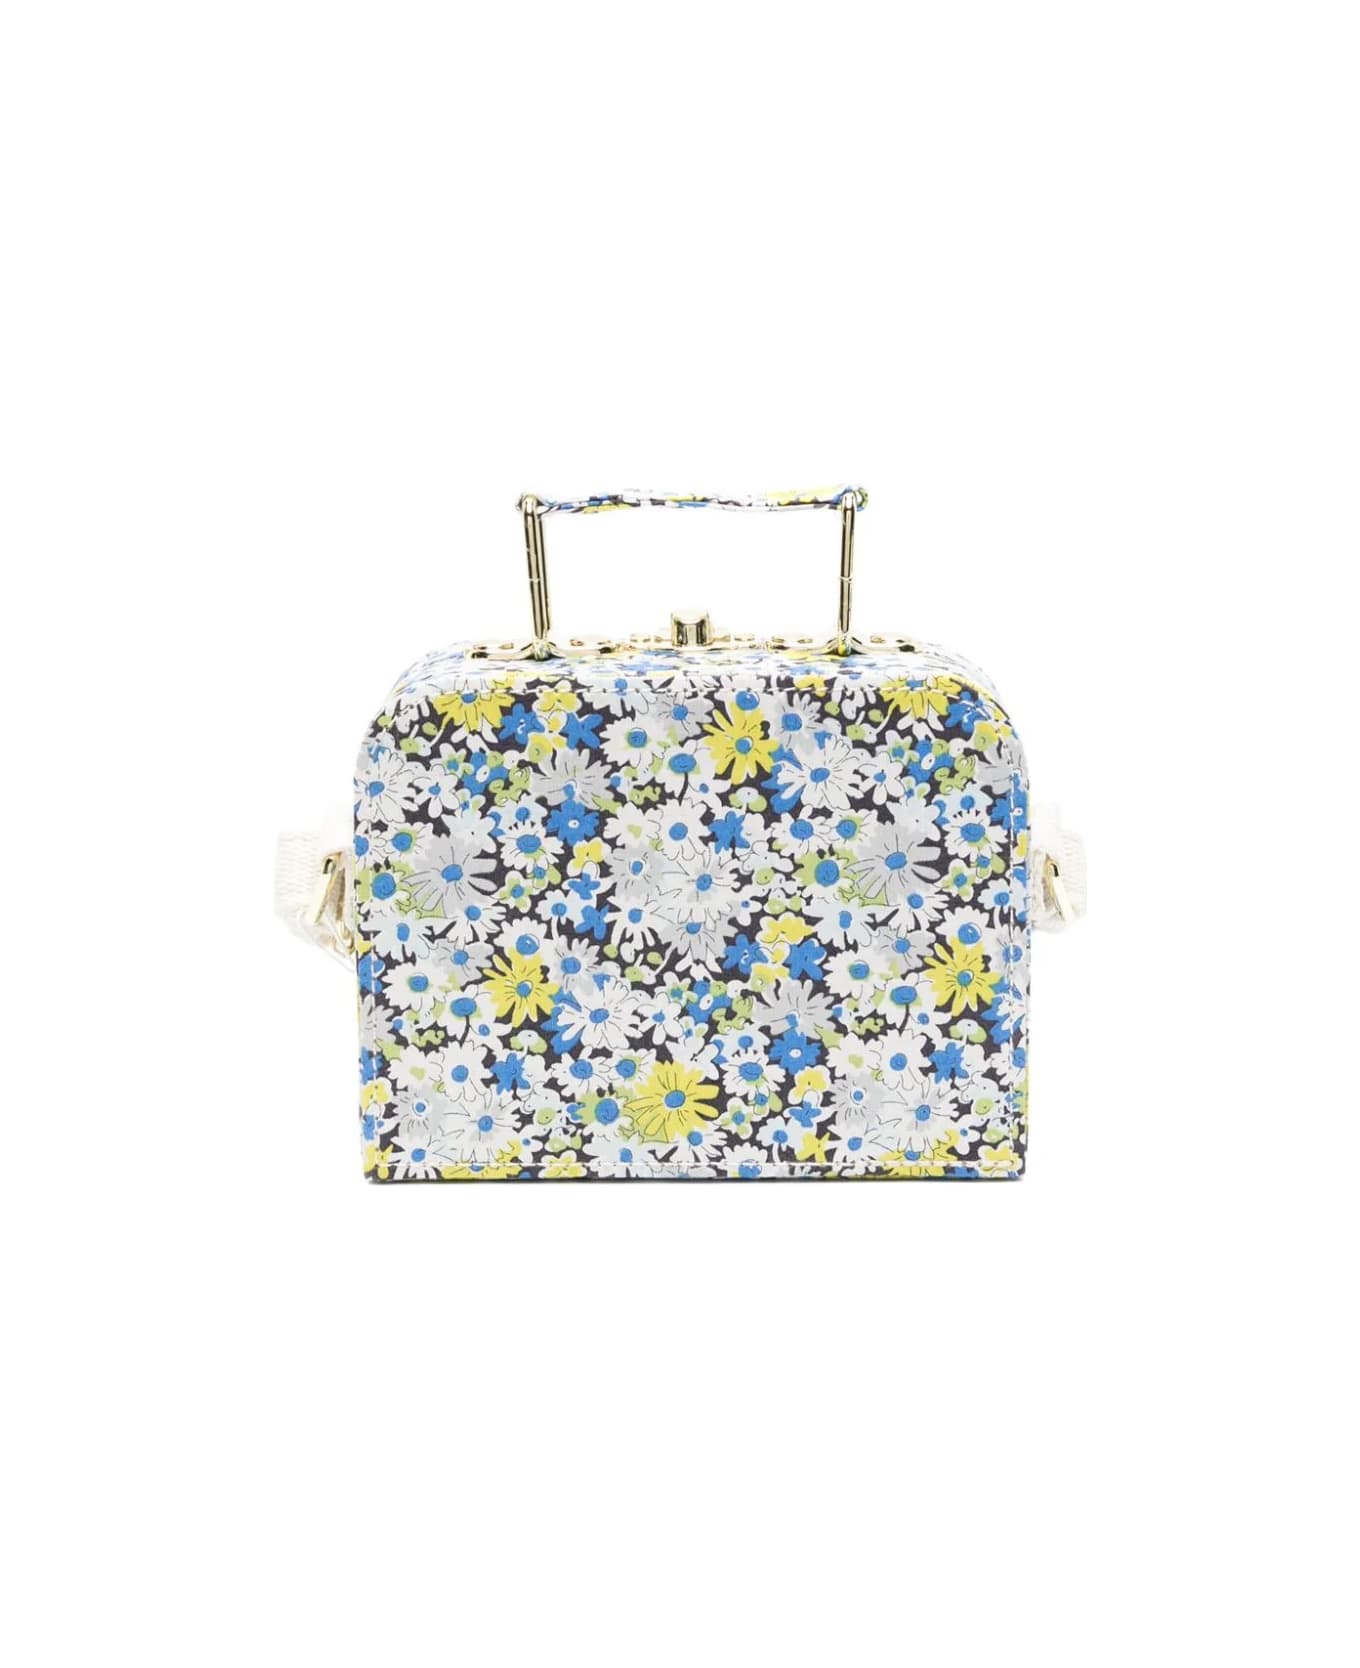 Bonpoint Aimane Valise Bag In Blue Flowers - Blue